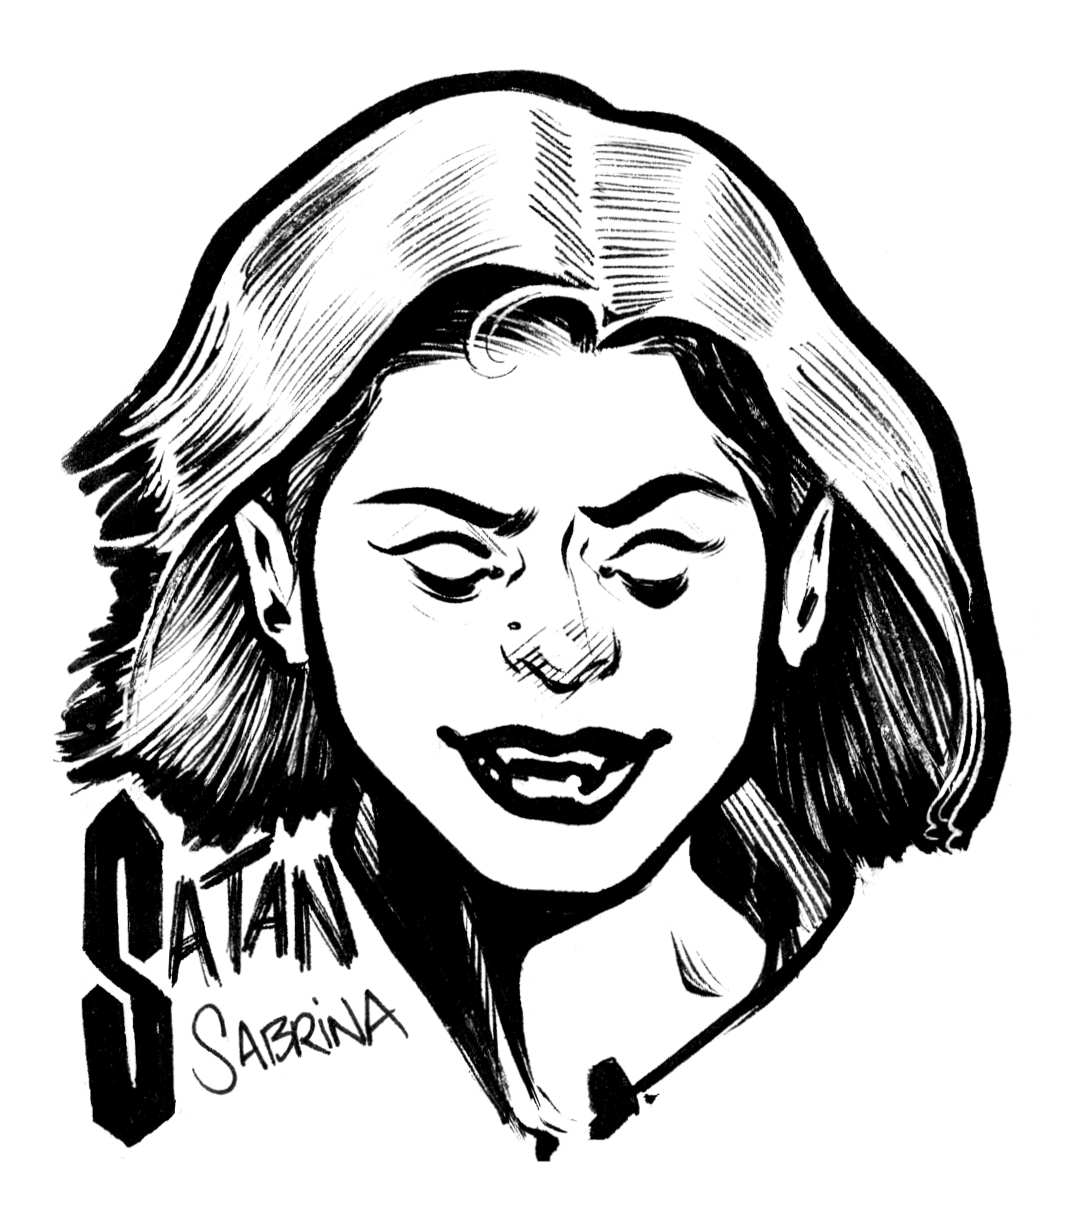 the chilling adventures of Sabrina satan satanic illustration pen and ink